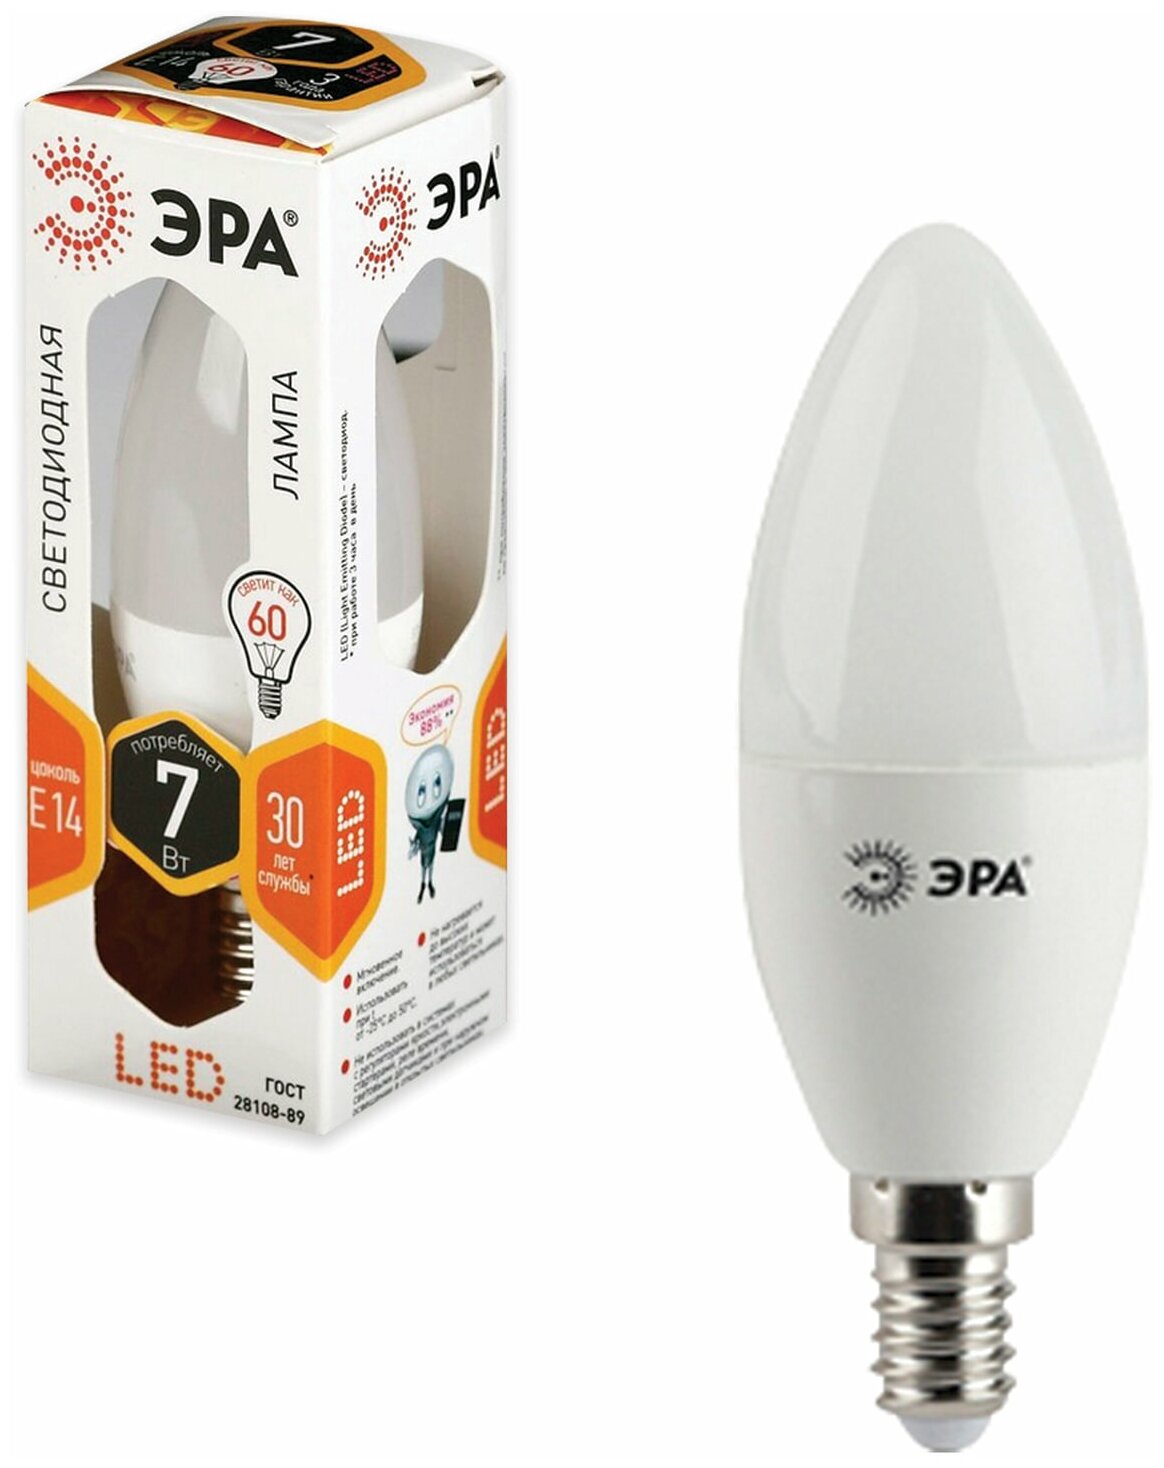 Лампа светодиодная ЭРА, 7 (60) Вт, цоколь E14, "свеча", теплый белый свет, 30000 ч, LED smdB35-7w-827-E14